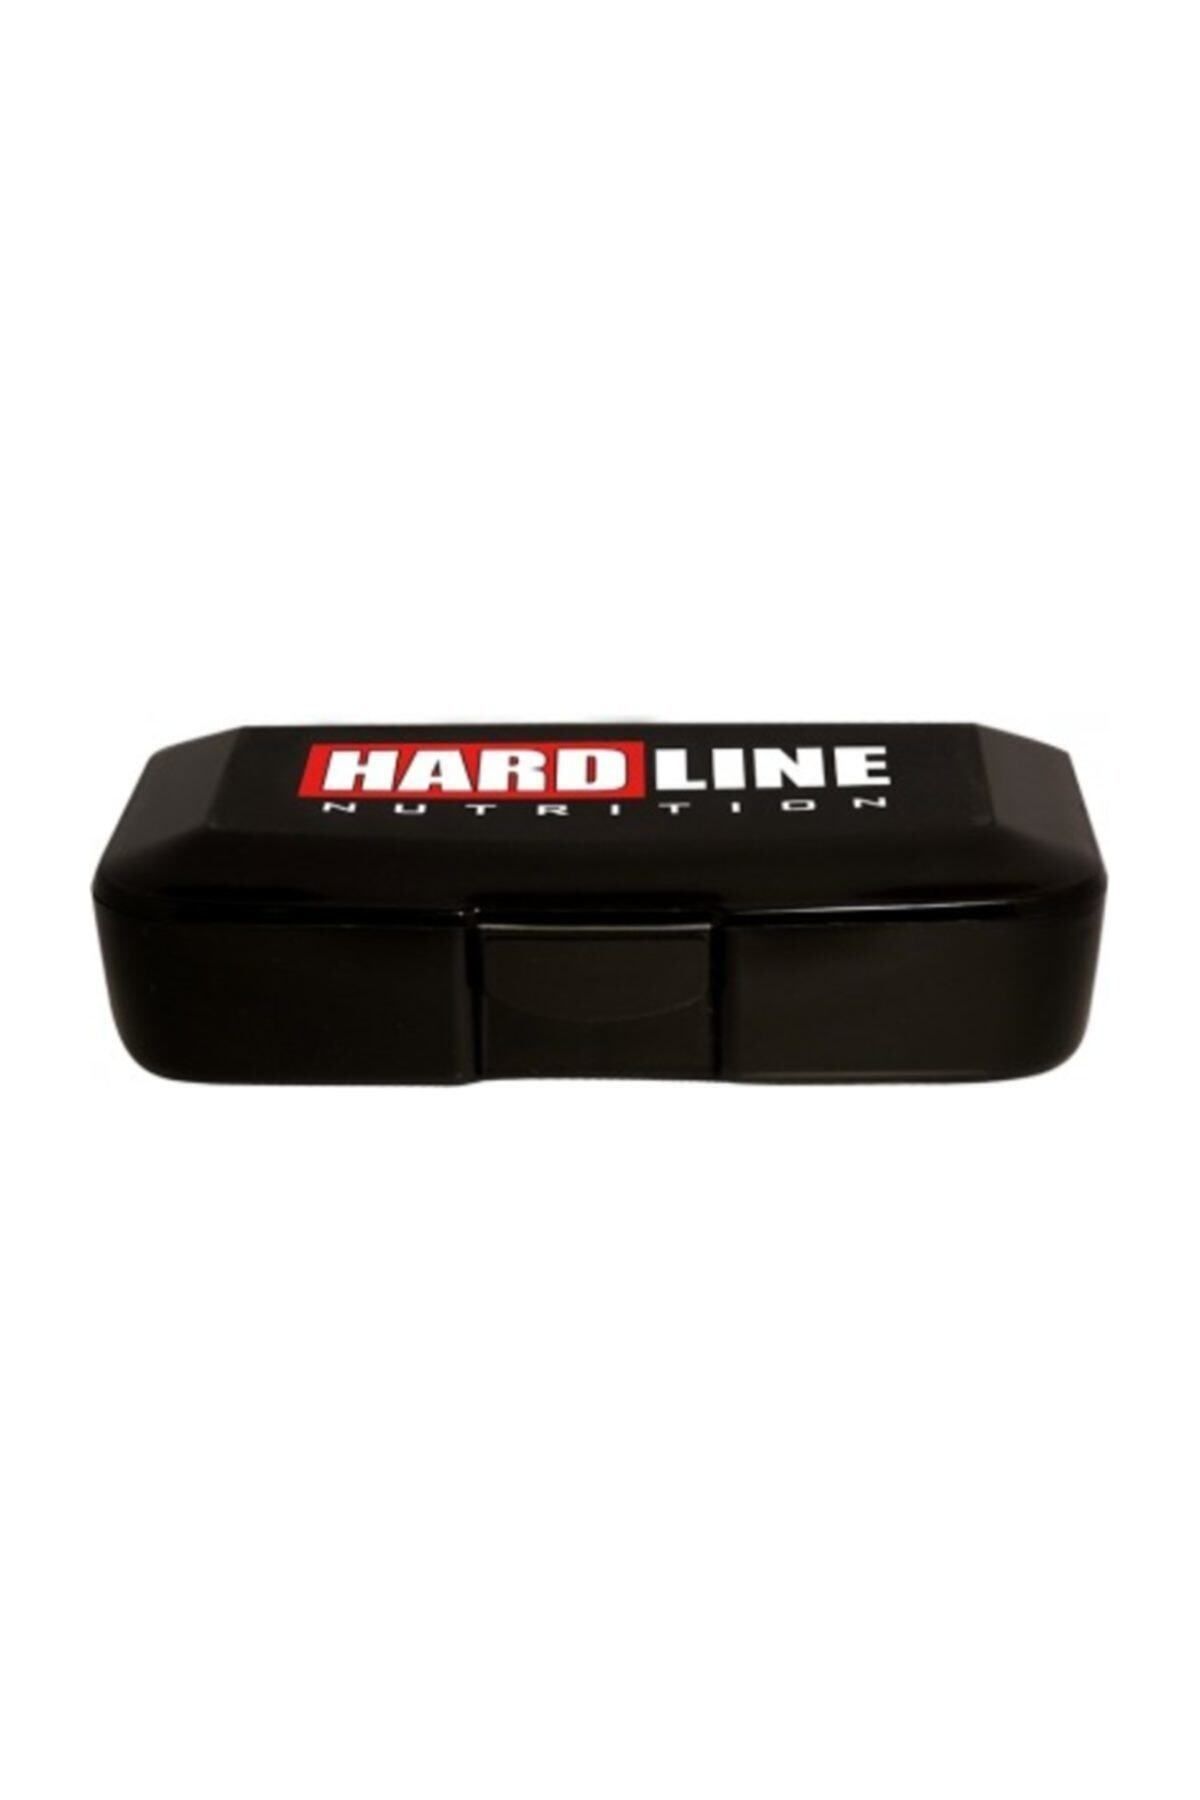 Hardline Pillbox Saklama Kutusu